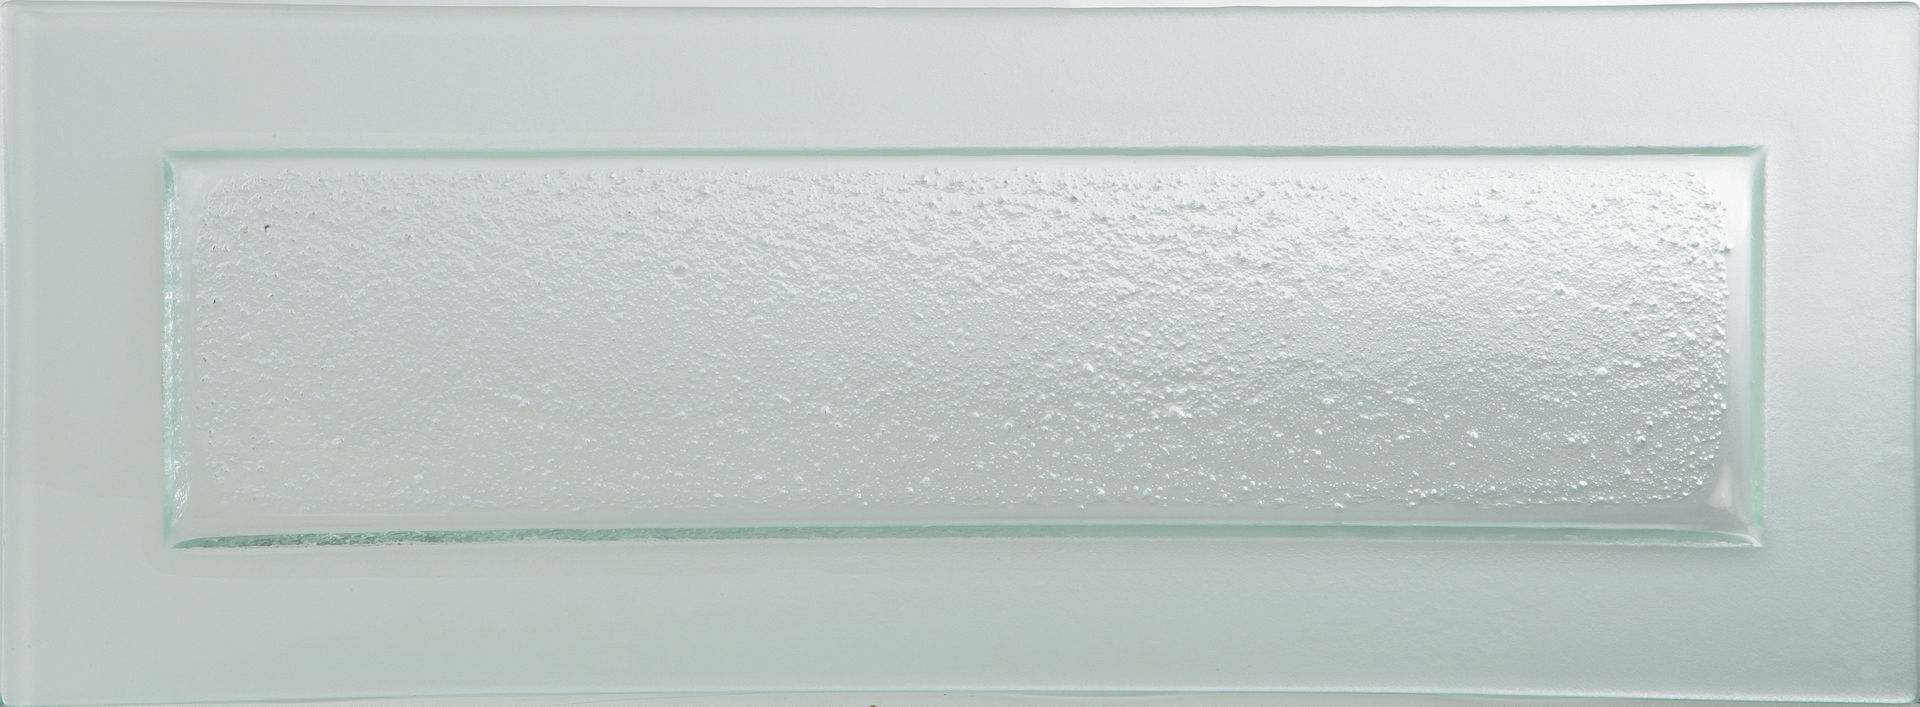 Gobi Rect Plate Frost Edge 19.75